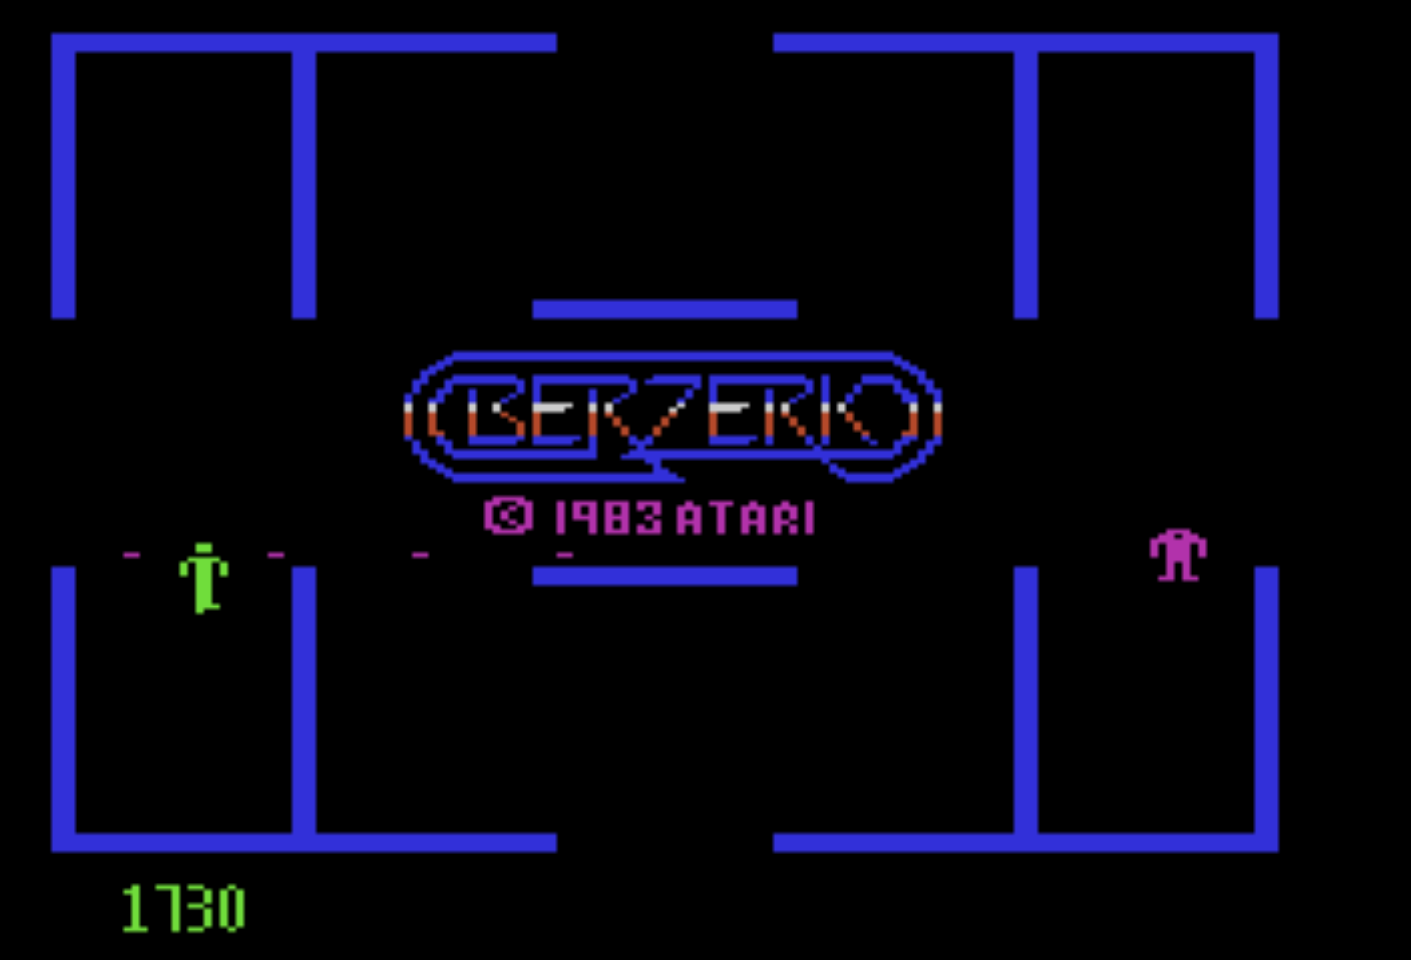 cncfreak: Berzerk (Atari 400/800/XL/XE Emulated) 1,730 points on 2013-09-24 22:11:22